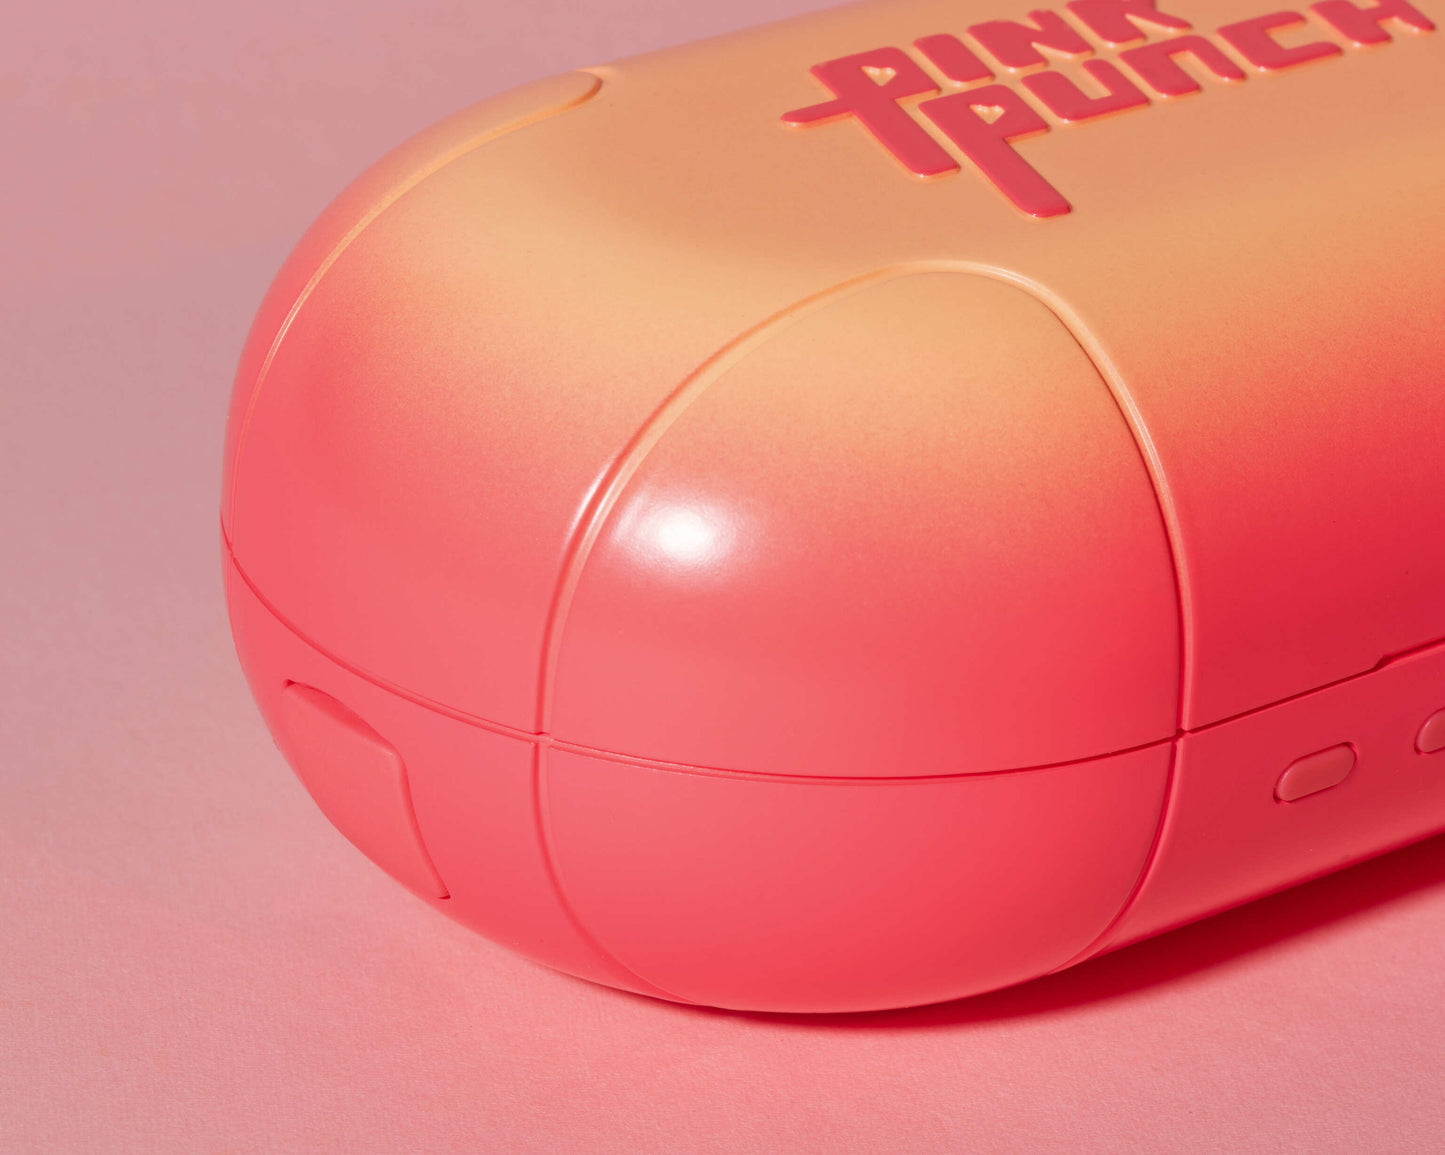 PinkPunch Sunset Mushroom APP Control Vibrator | Loveme Sex